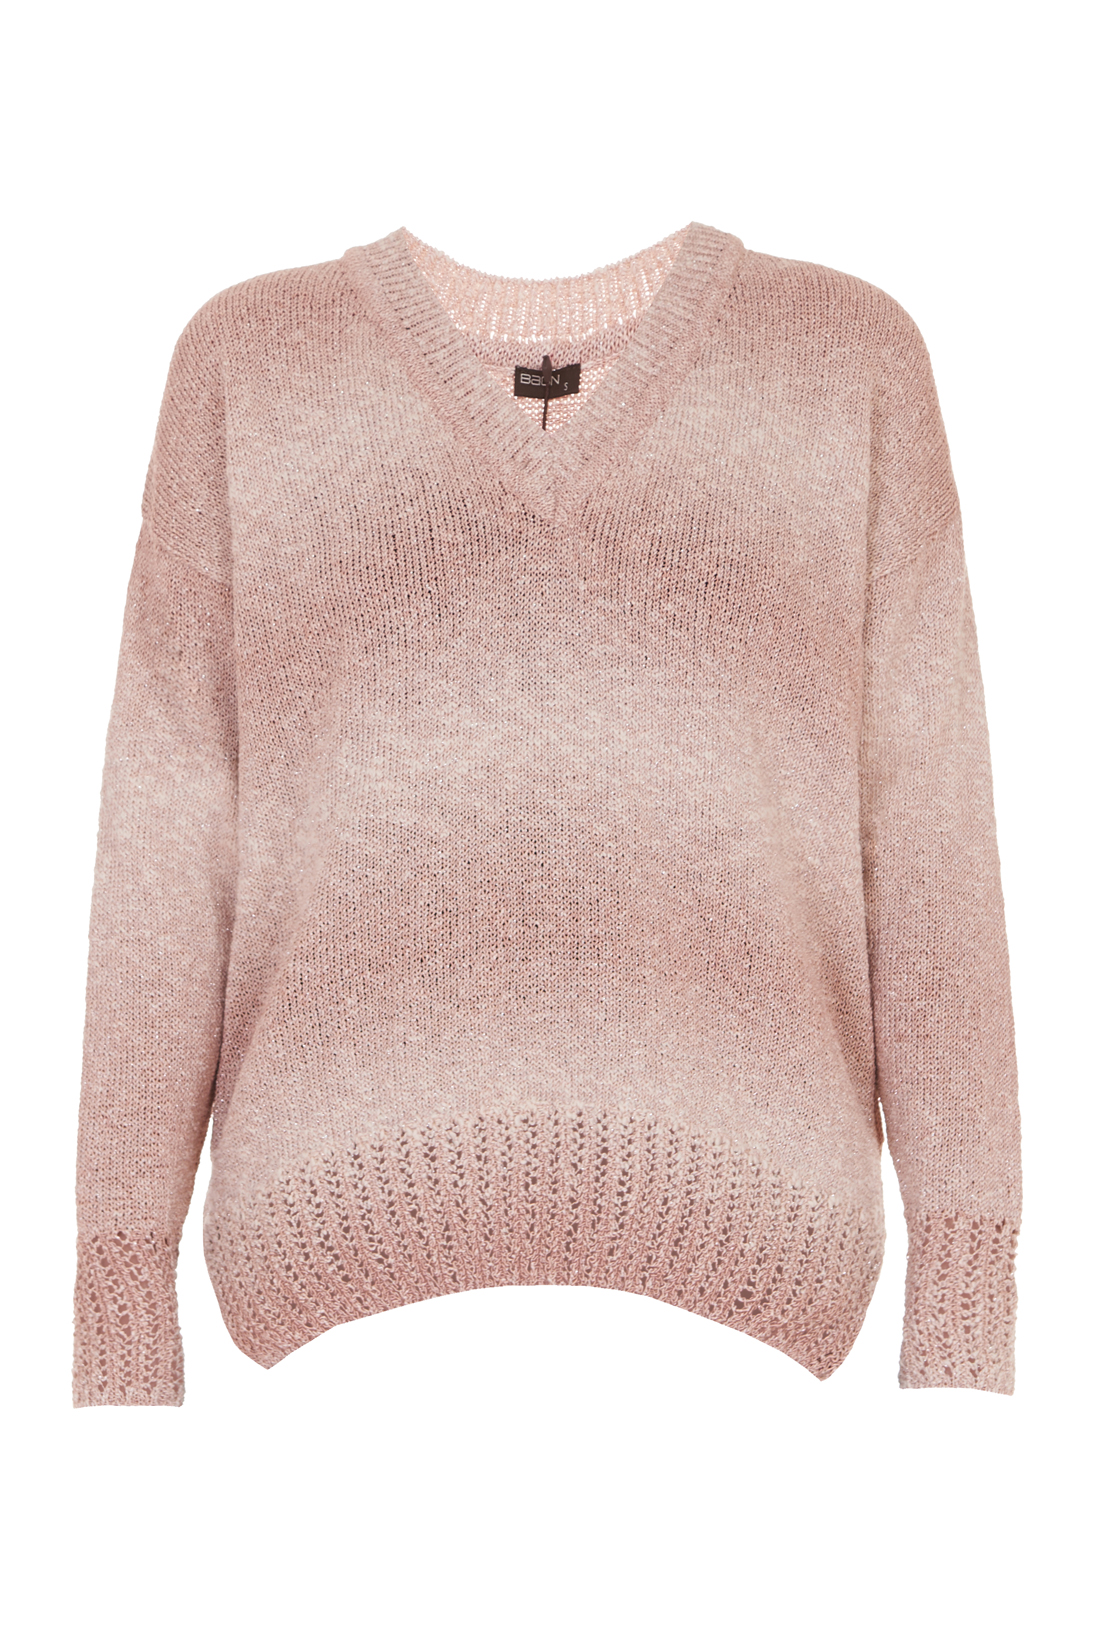 Пуловер с градиентом (арт. baon B138014), размер XXL, цвет розовый Пуловер с градиентом (арт. baon B138014) - фото 3